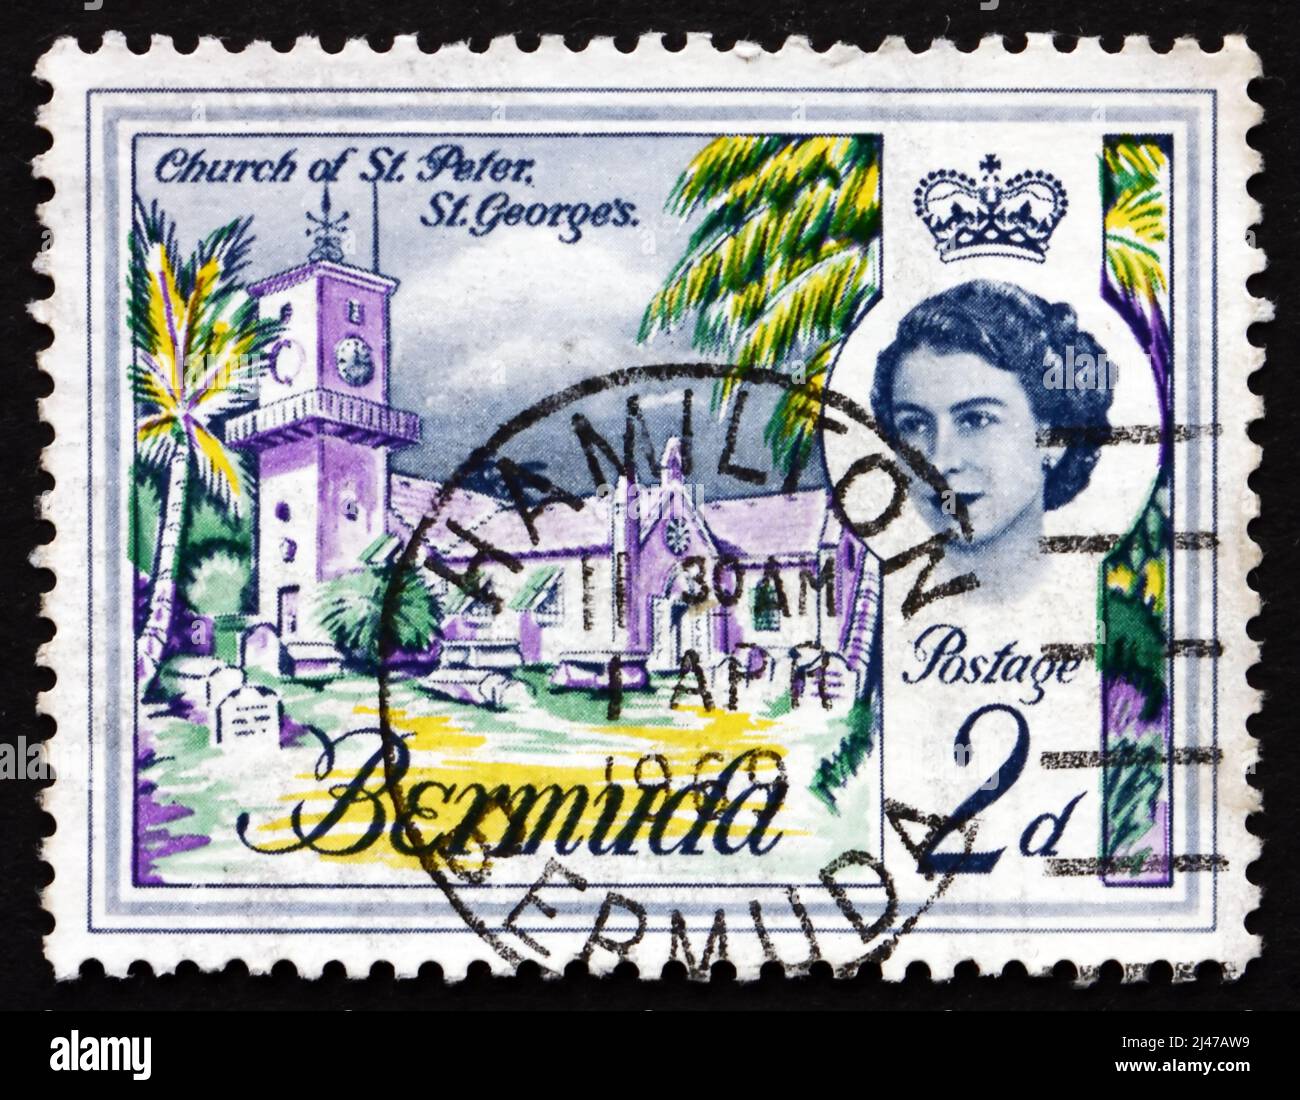 BERMUDA - CIRCA 1962: a stamp printed in Bermuda shows Church of St. Peter, St. George's, circa 1962 Stock Photo